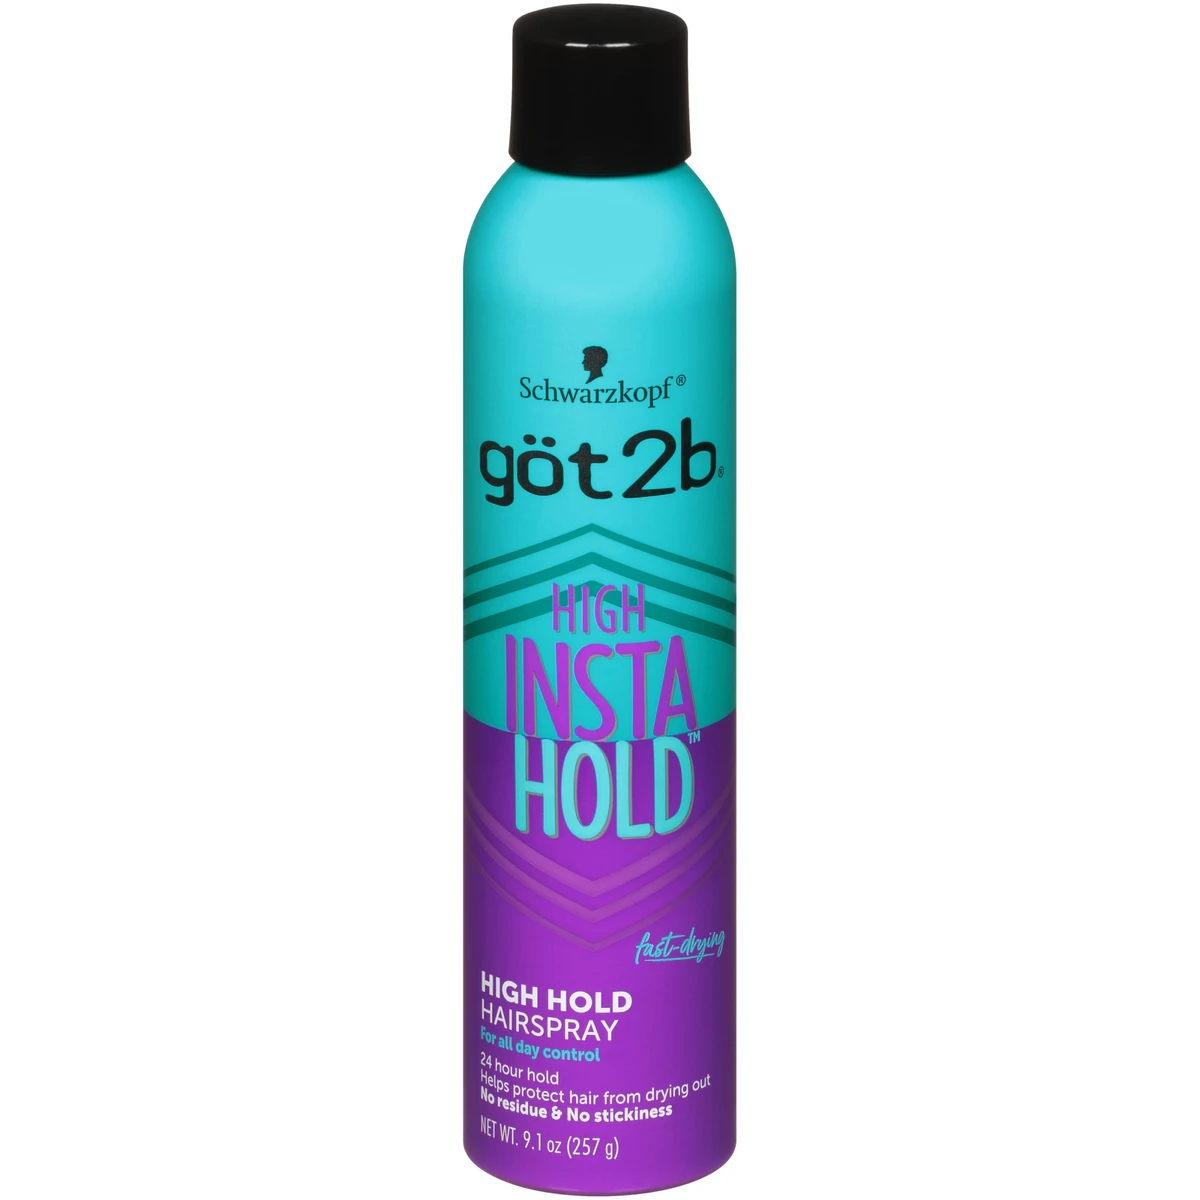 Got2b High Insta Hold Hairspray  9.1oz